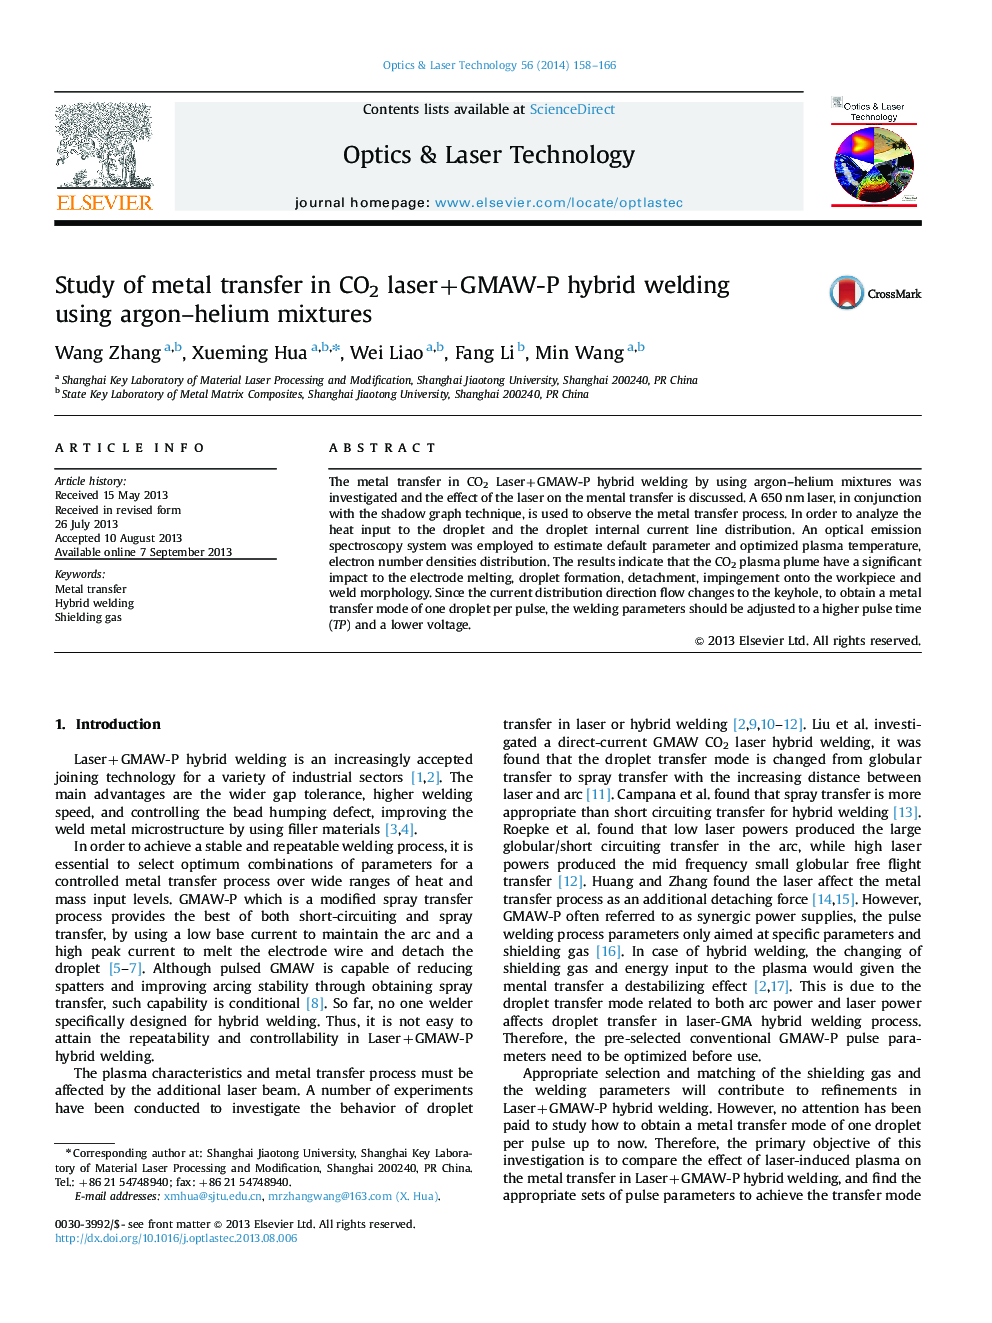 Study of metal transfer in CO2 laser+GMAW-P hybrid welding using argon–helium mixtures